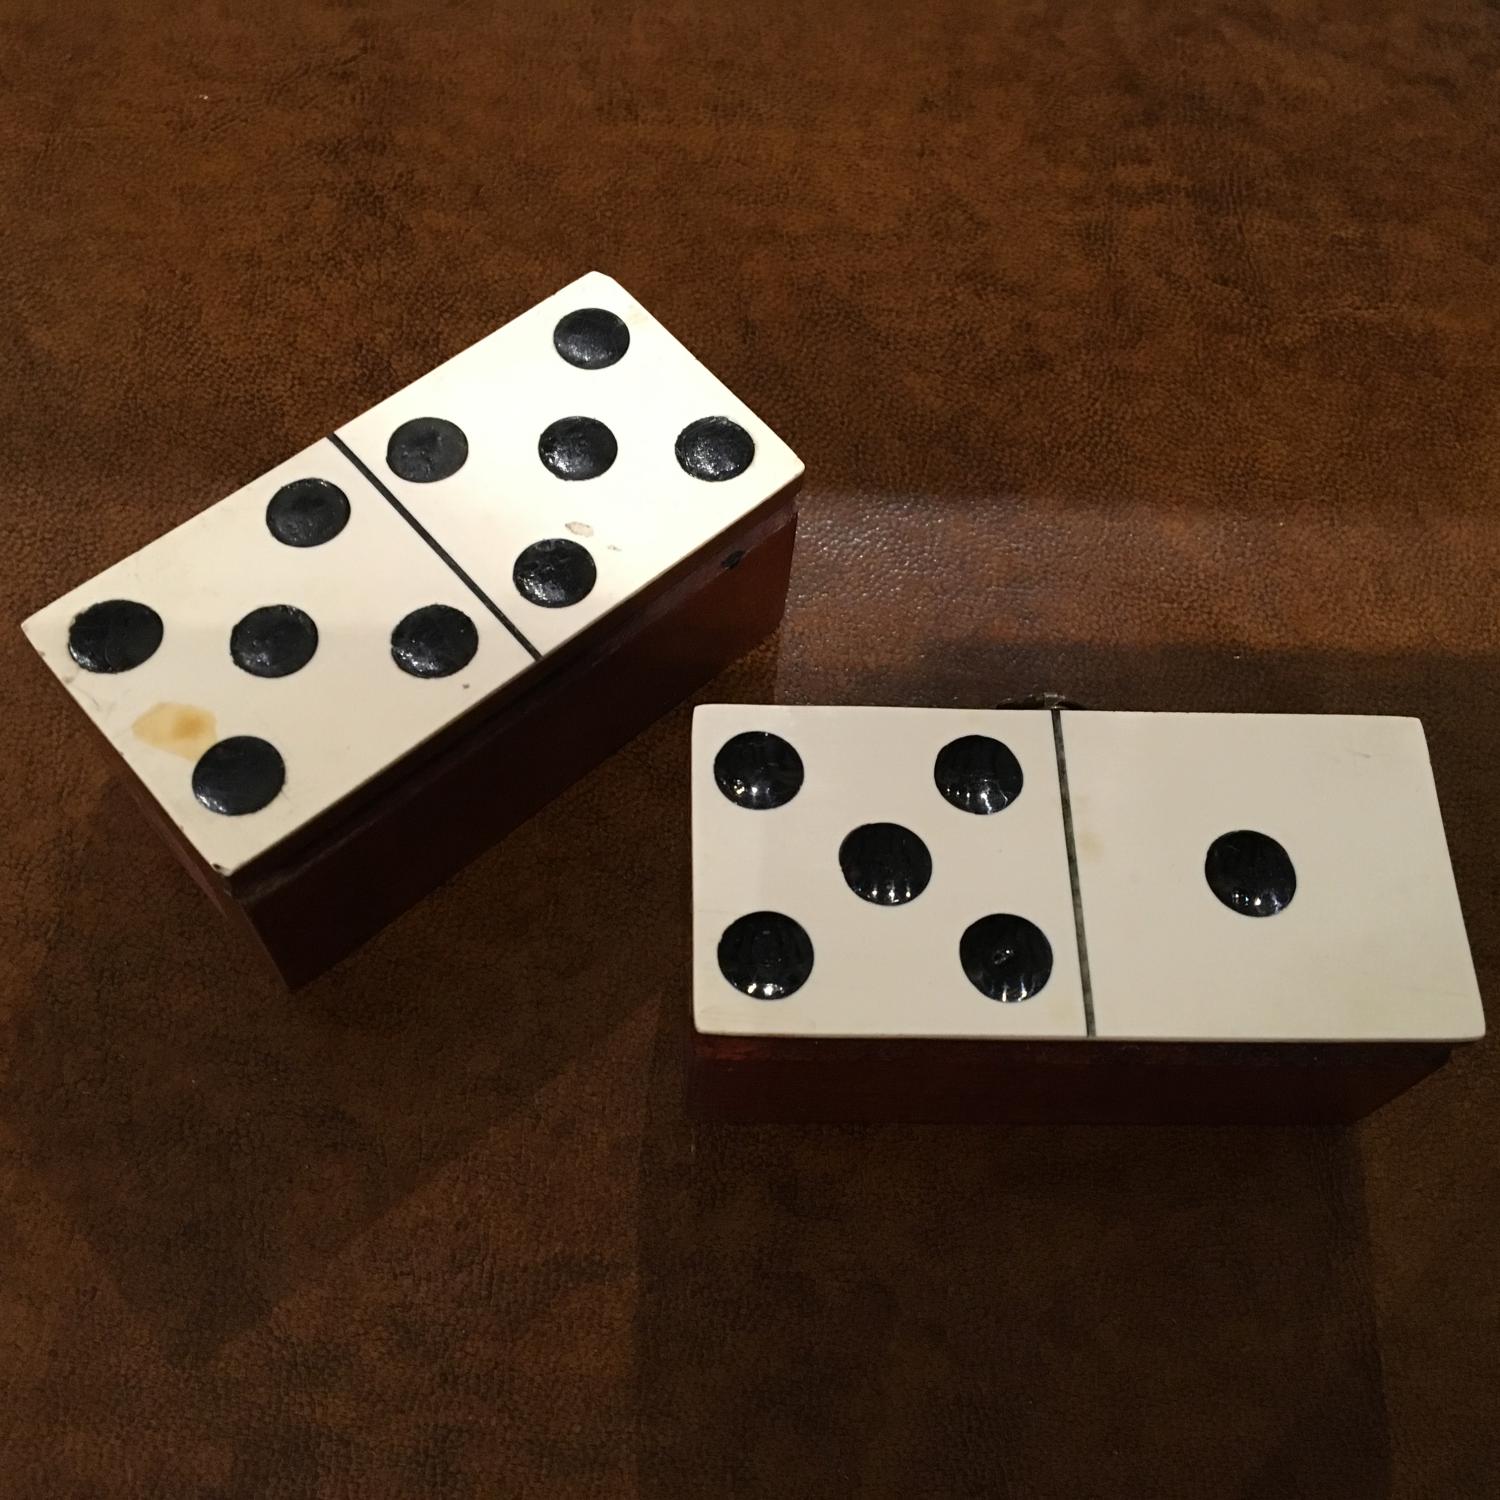 Miniature dominoes